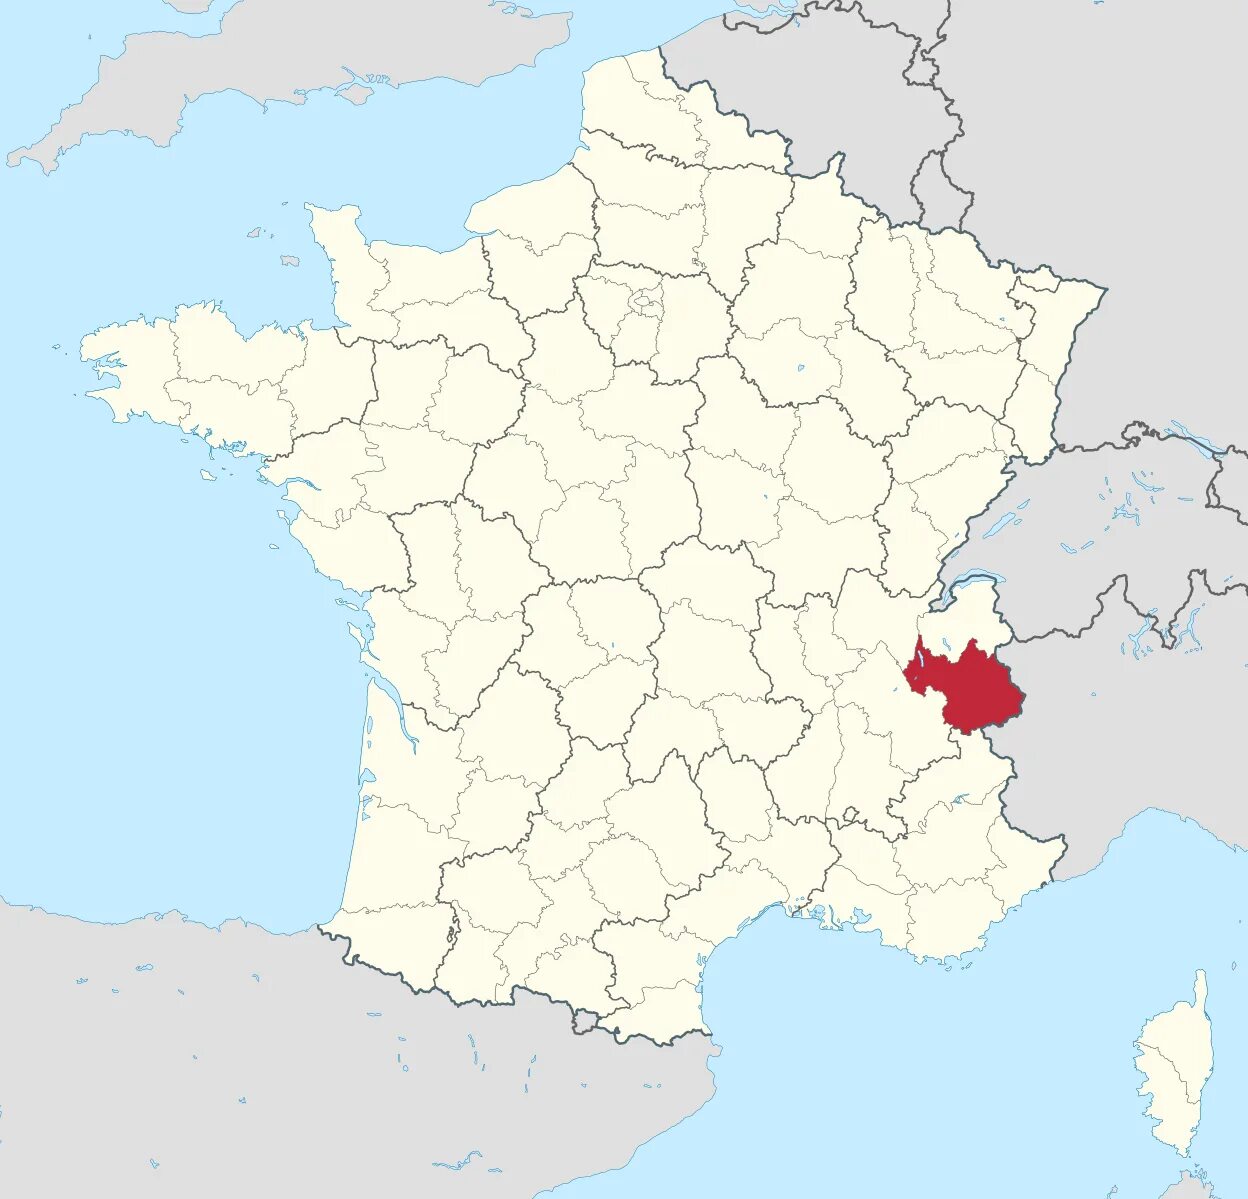 Департамент Жиронда Франция на карте. Лангедок графство Тулузское. Савойя на карте Франции. Регион Лангедок-Руссильон во Франции.